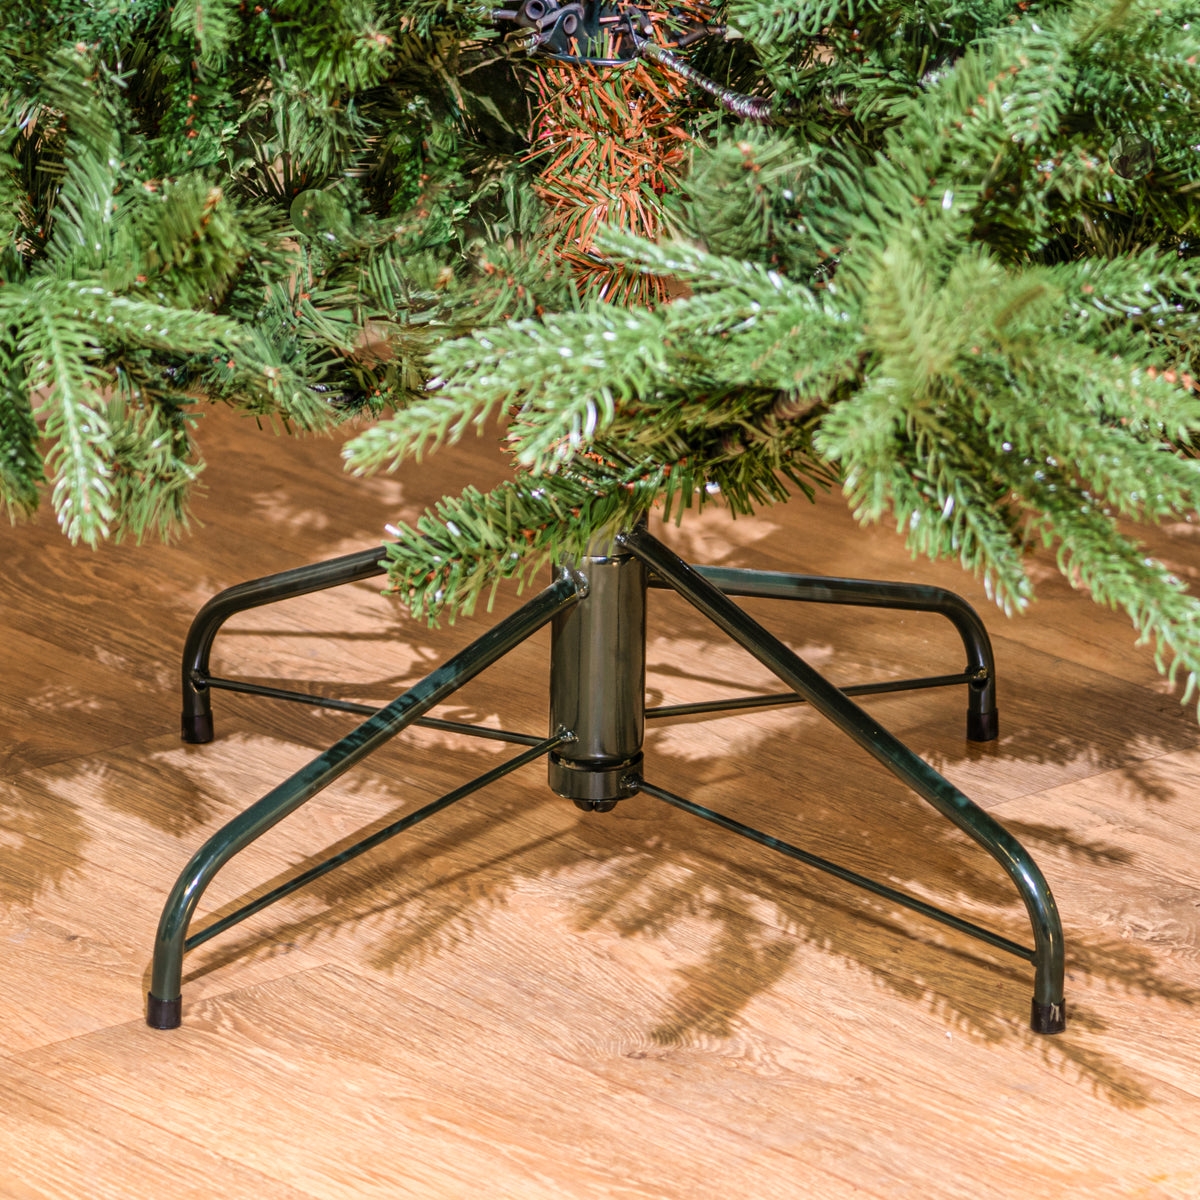 6ft - 7ft Portmagee Pine Artificial PE Christmas Tree